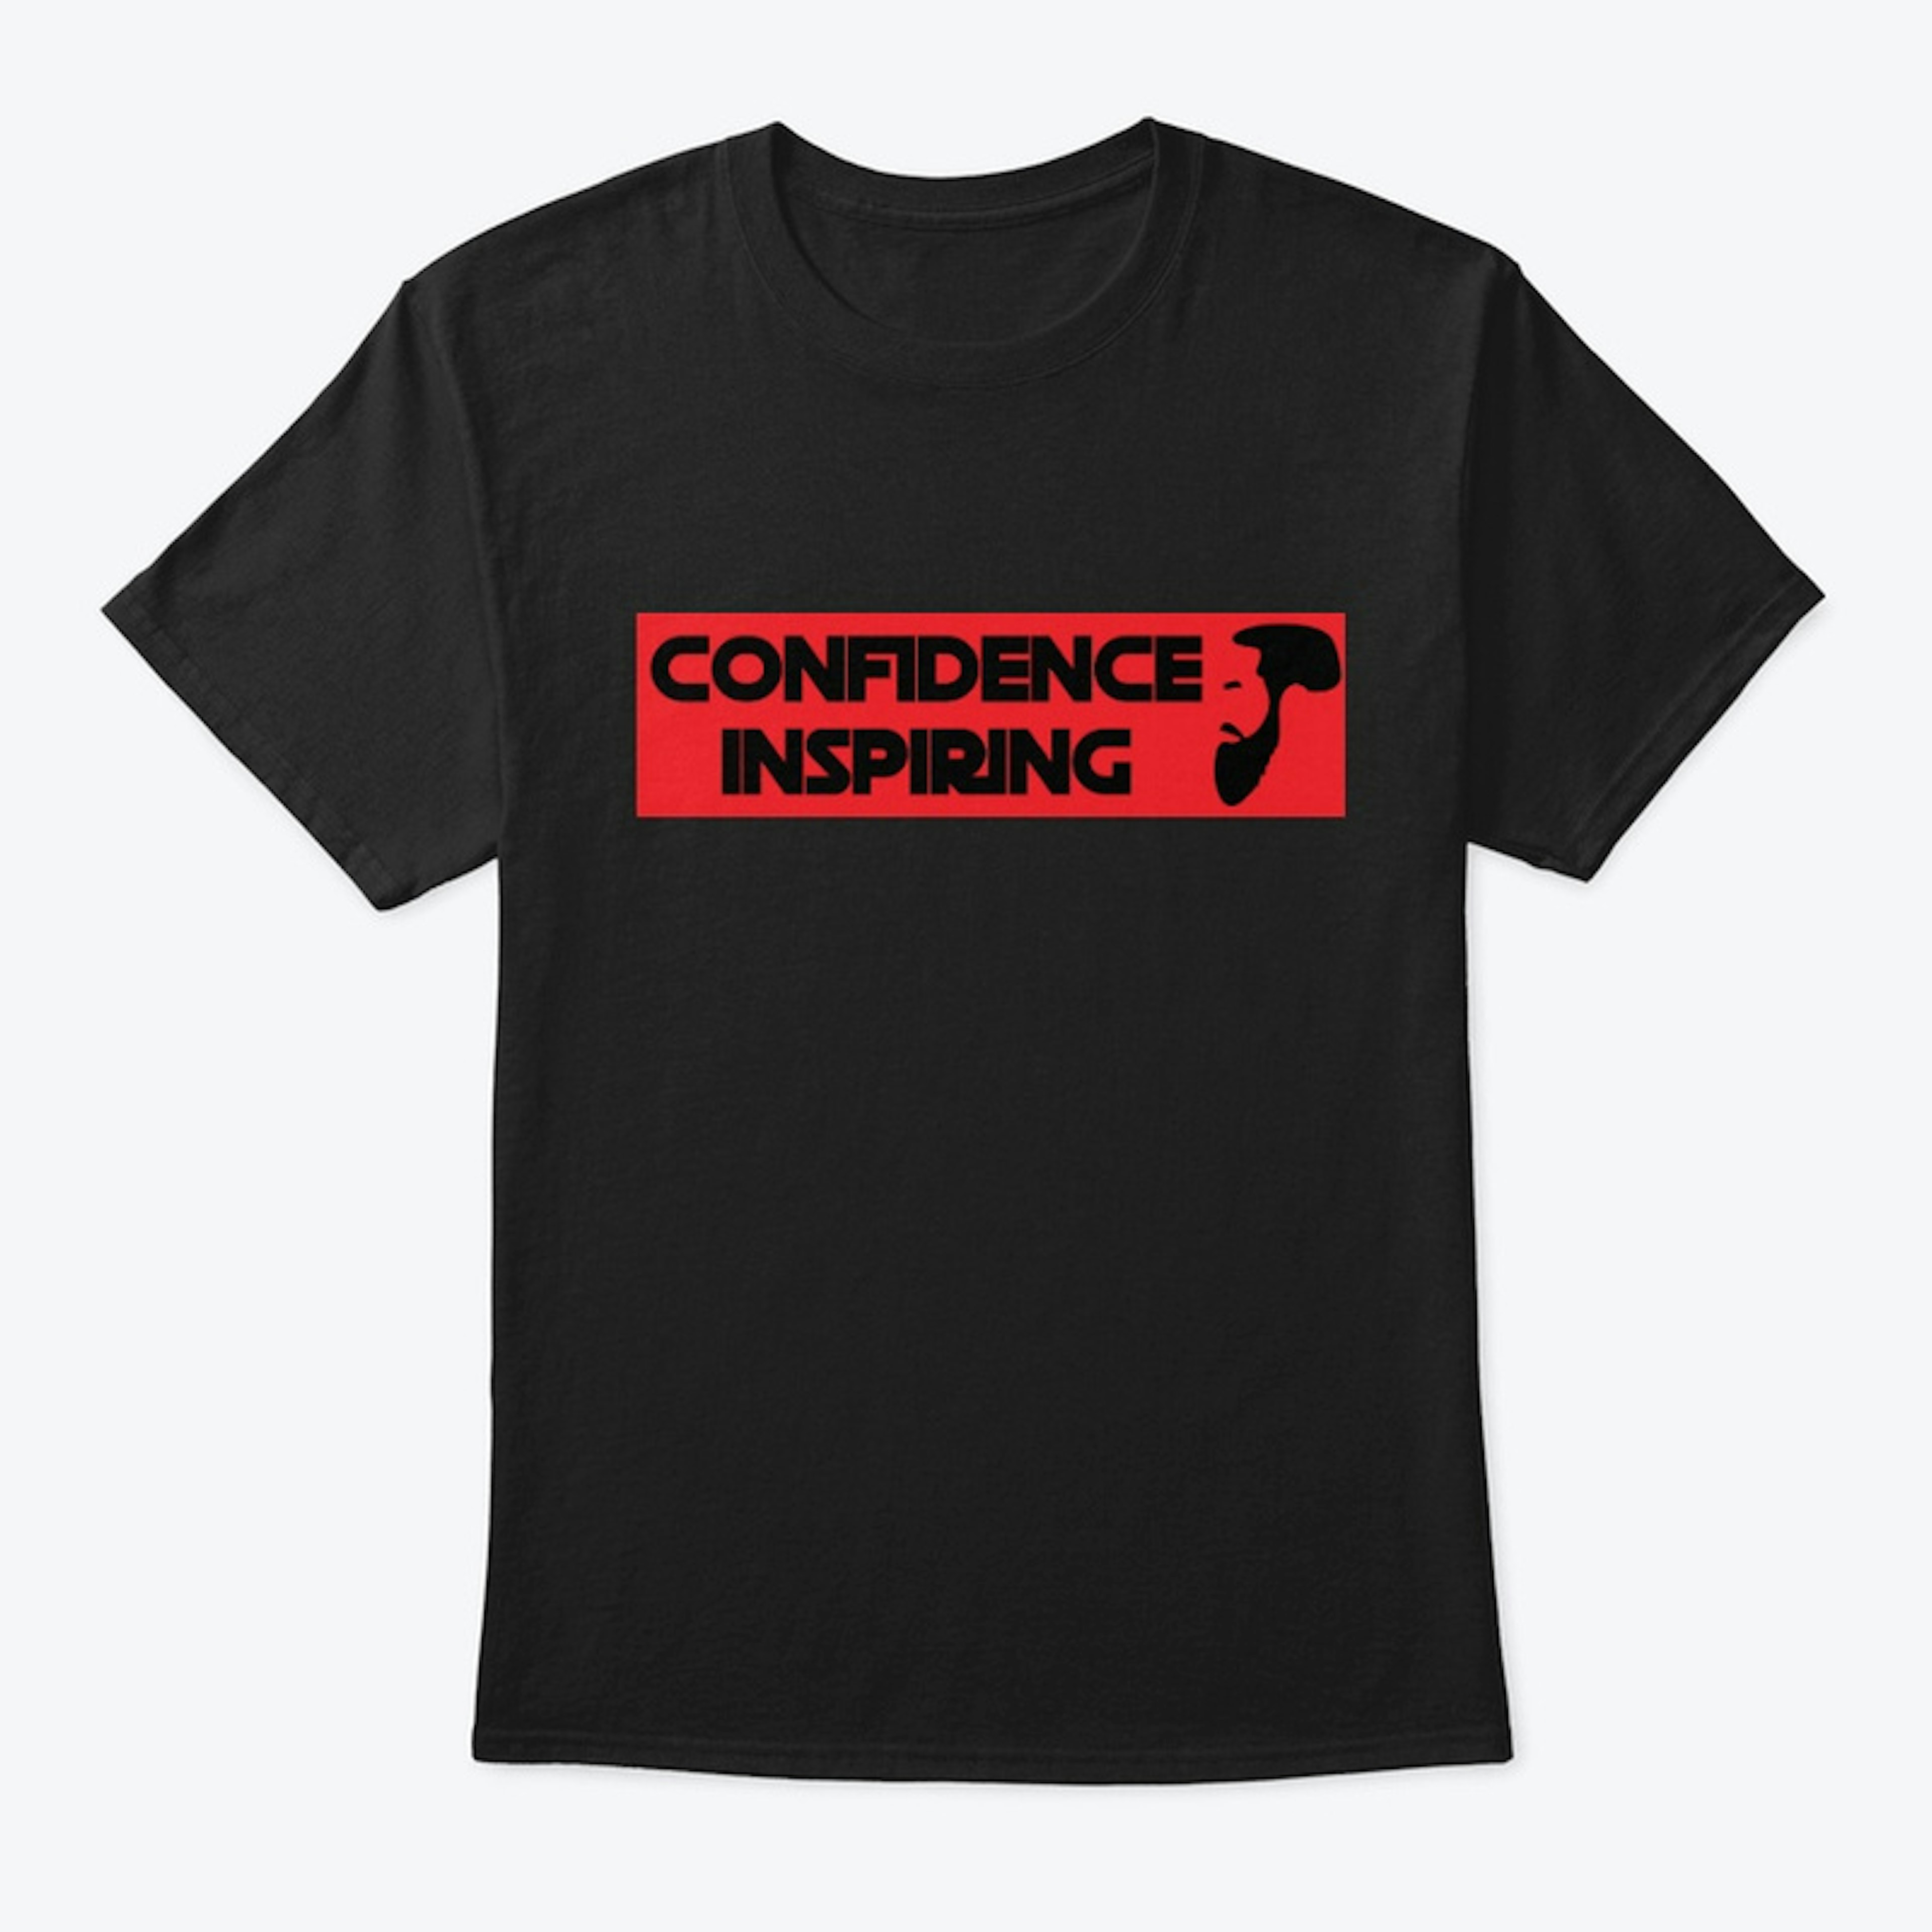 "Confidence Inspiring"